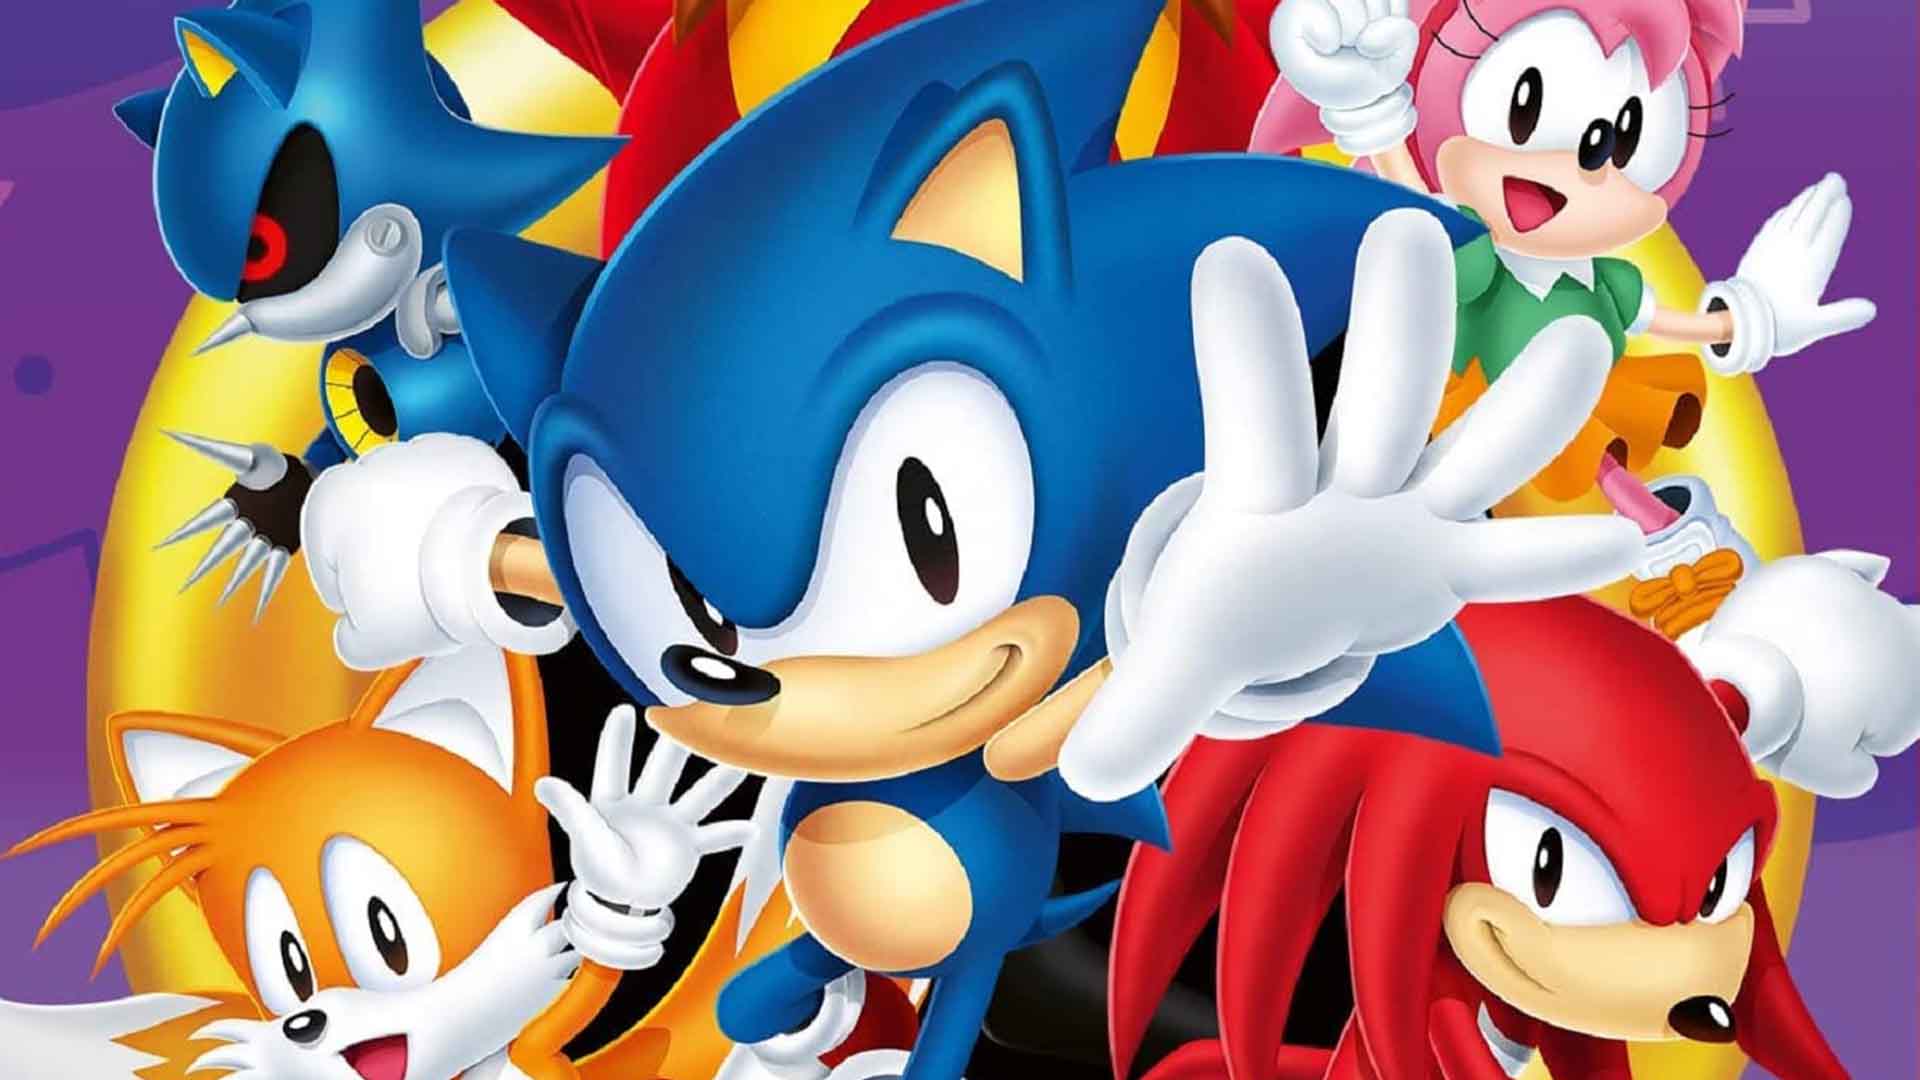 Geek Review: Sonic Mania Plus